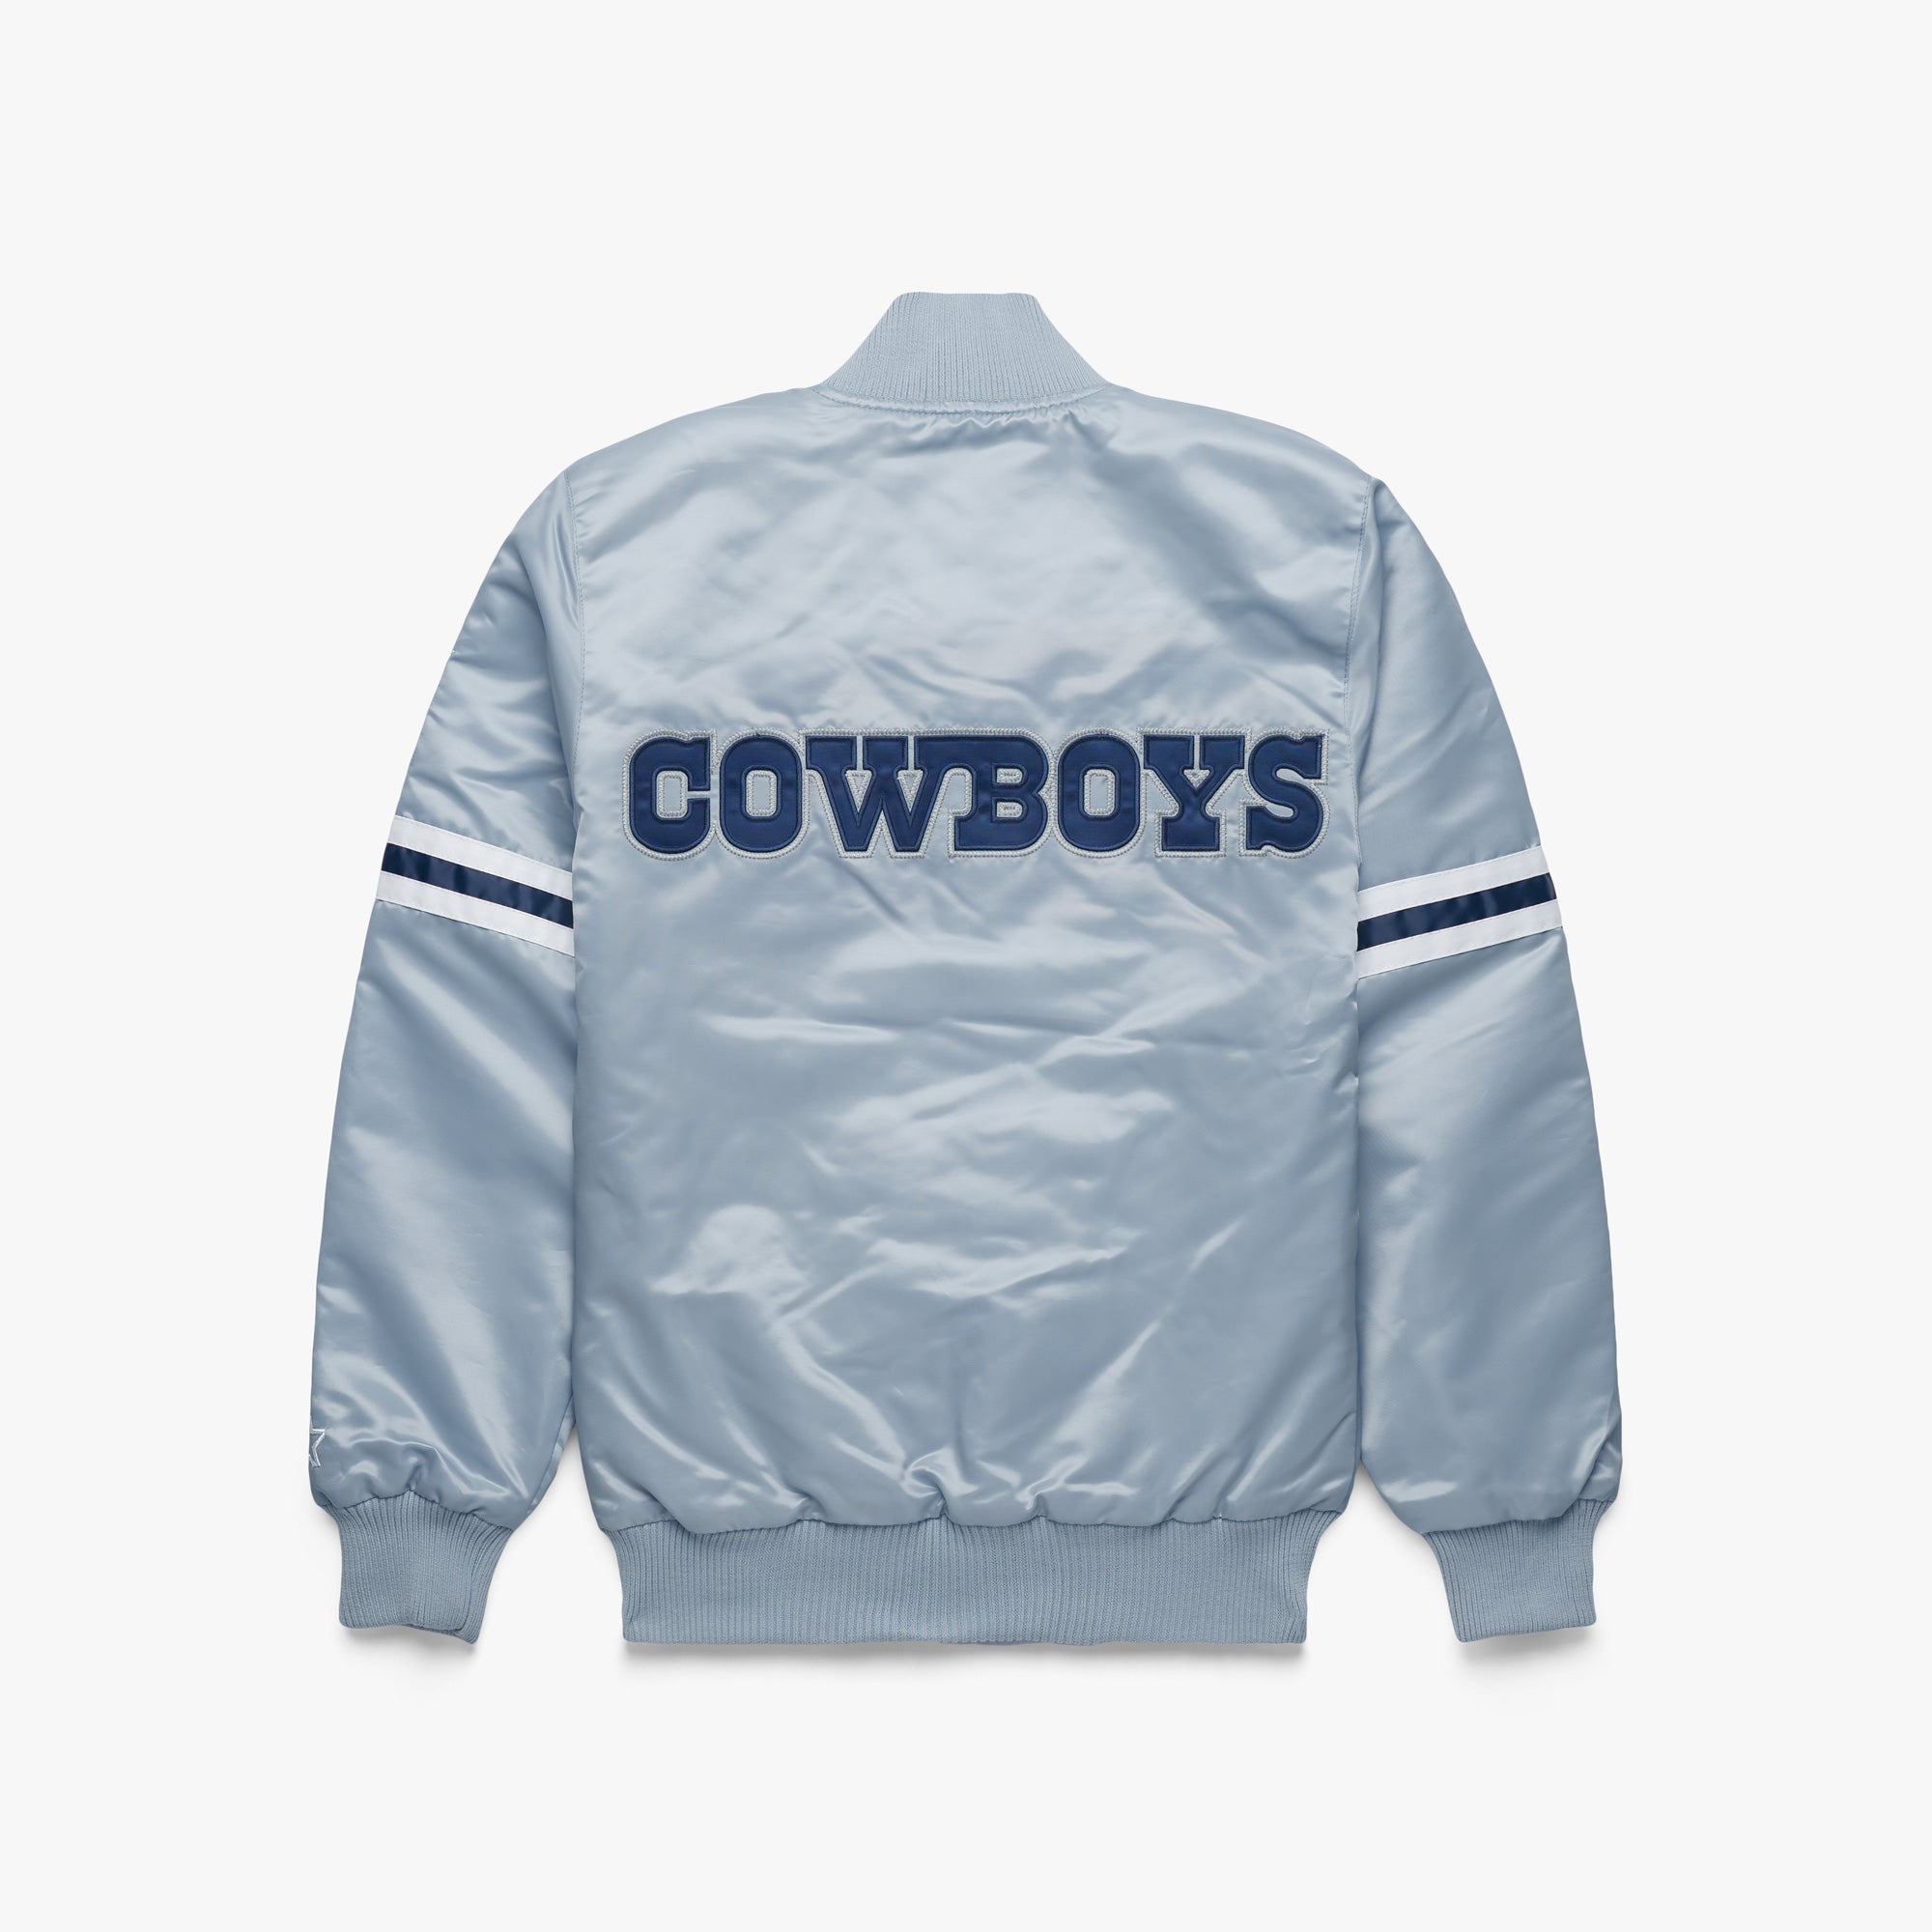 Dallas Cowboys Navy Blue and Silver Varsity Jacket - Filmsjackets